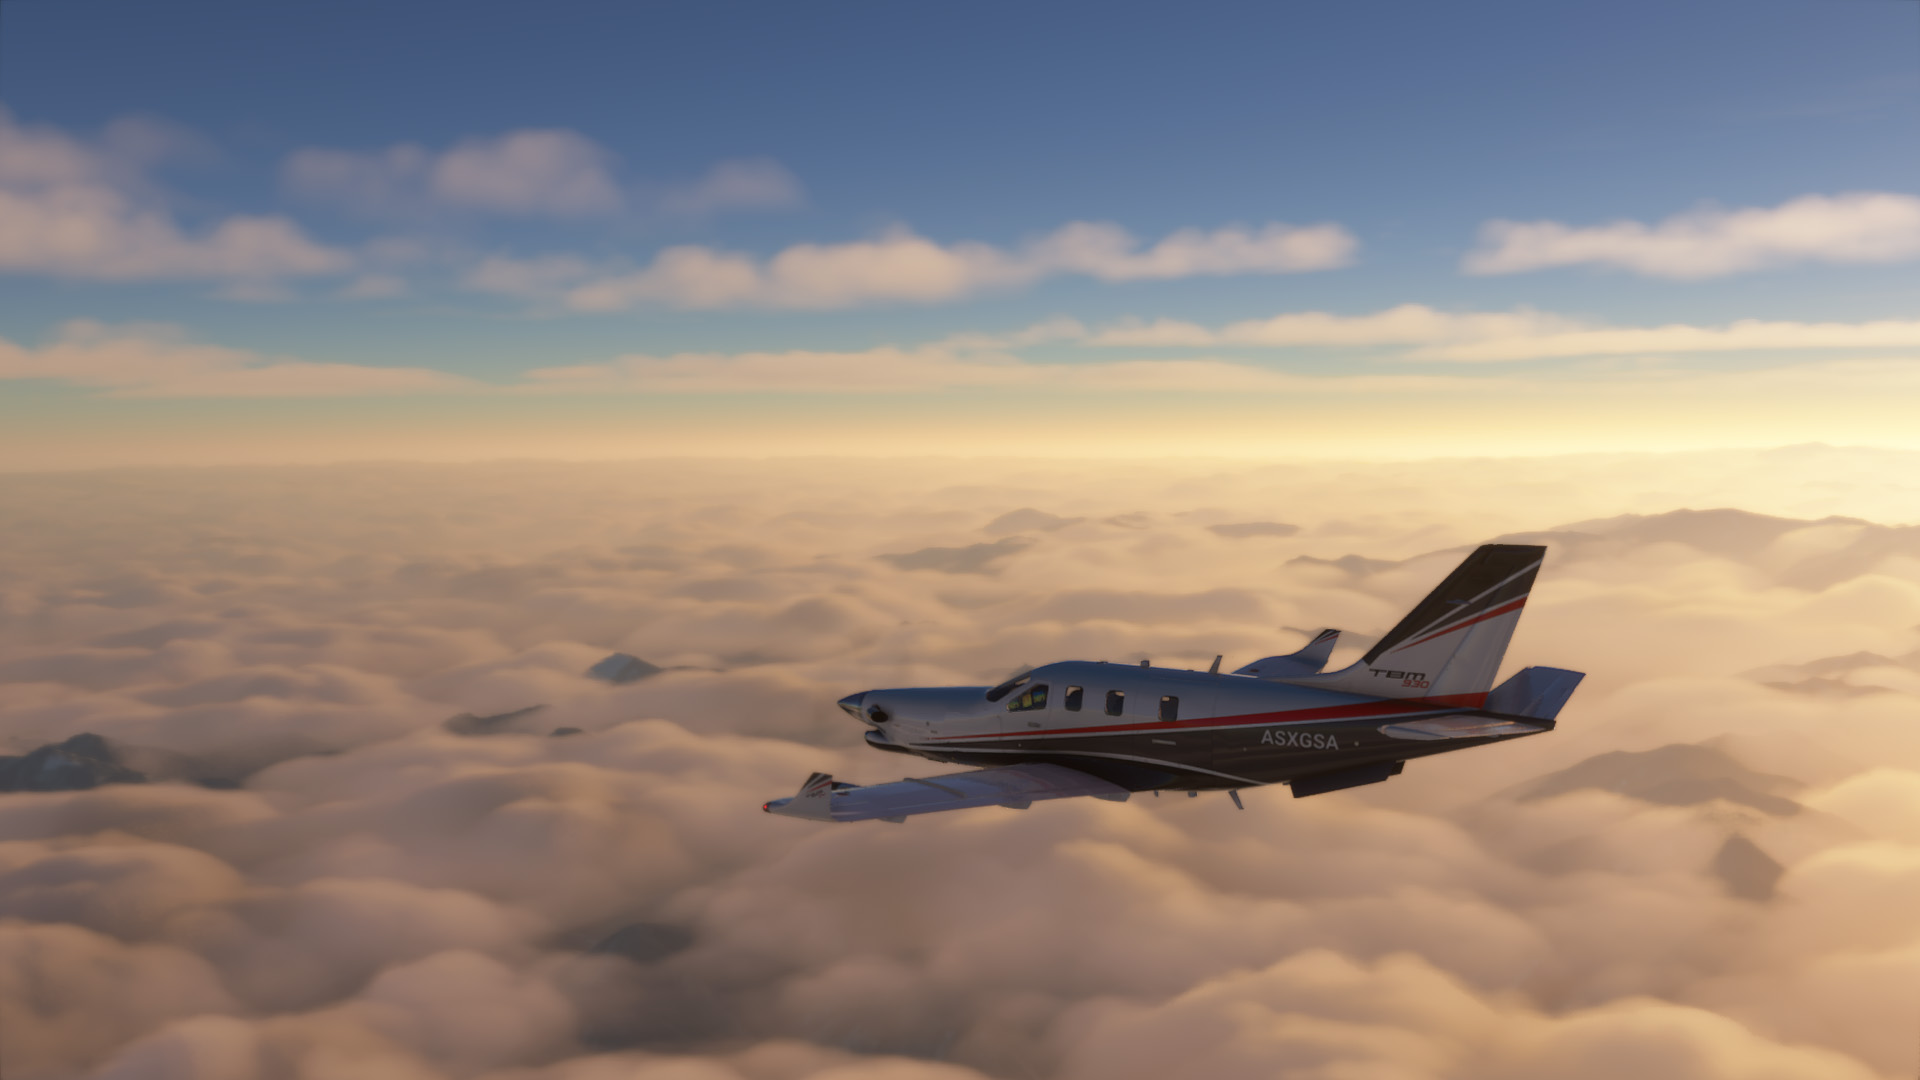 Microsoft Flight Simulator 2020 Screen Shot PC Gaming Aircraft Vehicle 1920x1080